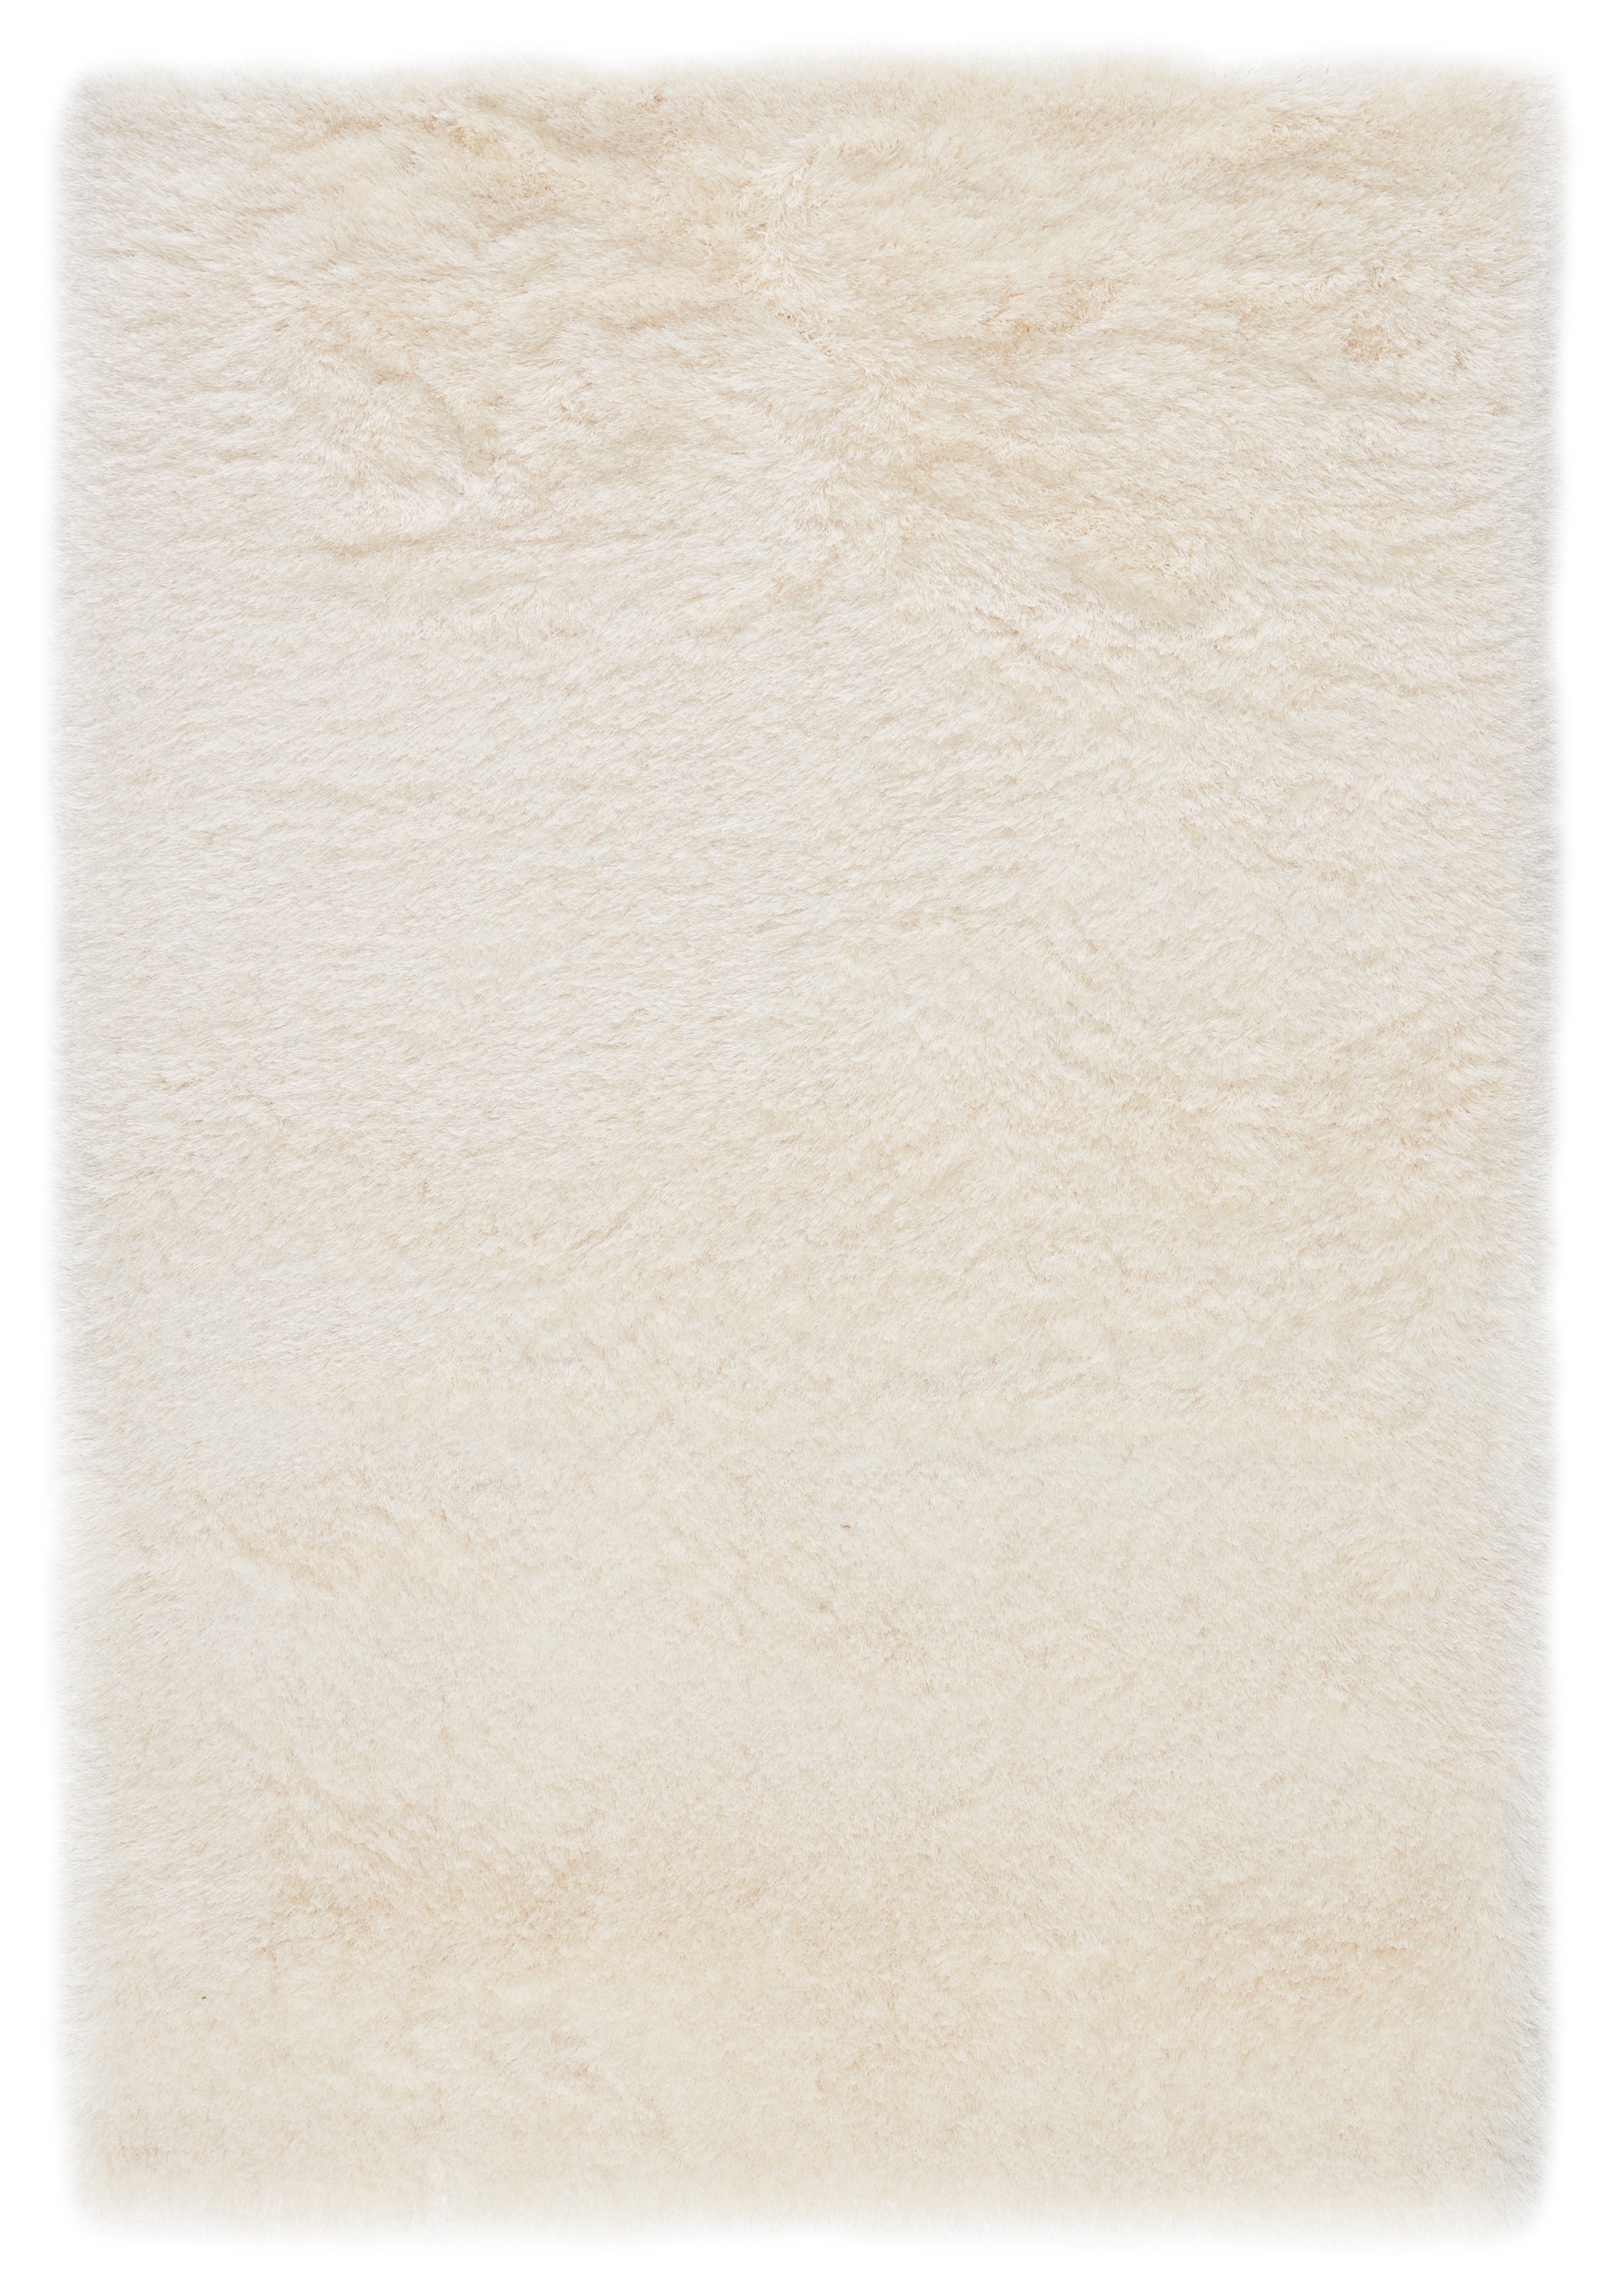 Marlowe Handmade Solid White Area Rug (5' X 7'6") - Image 0